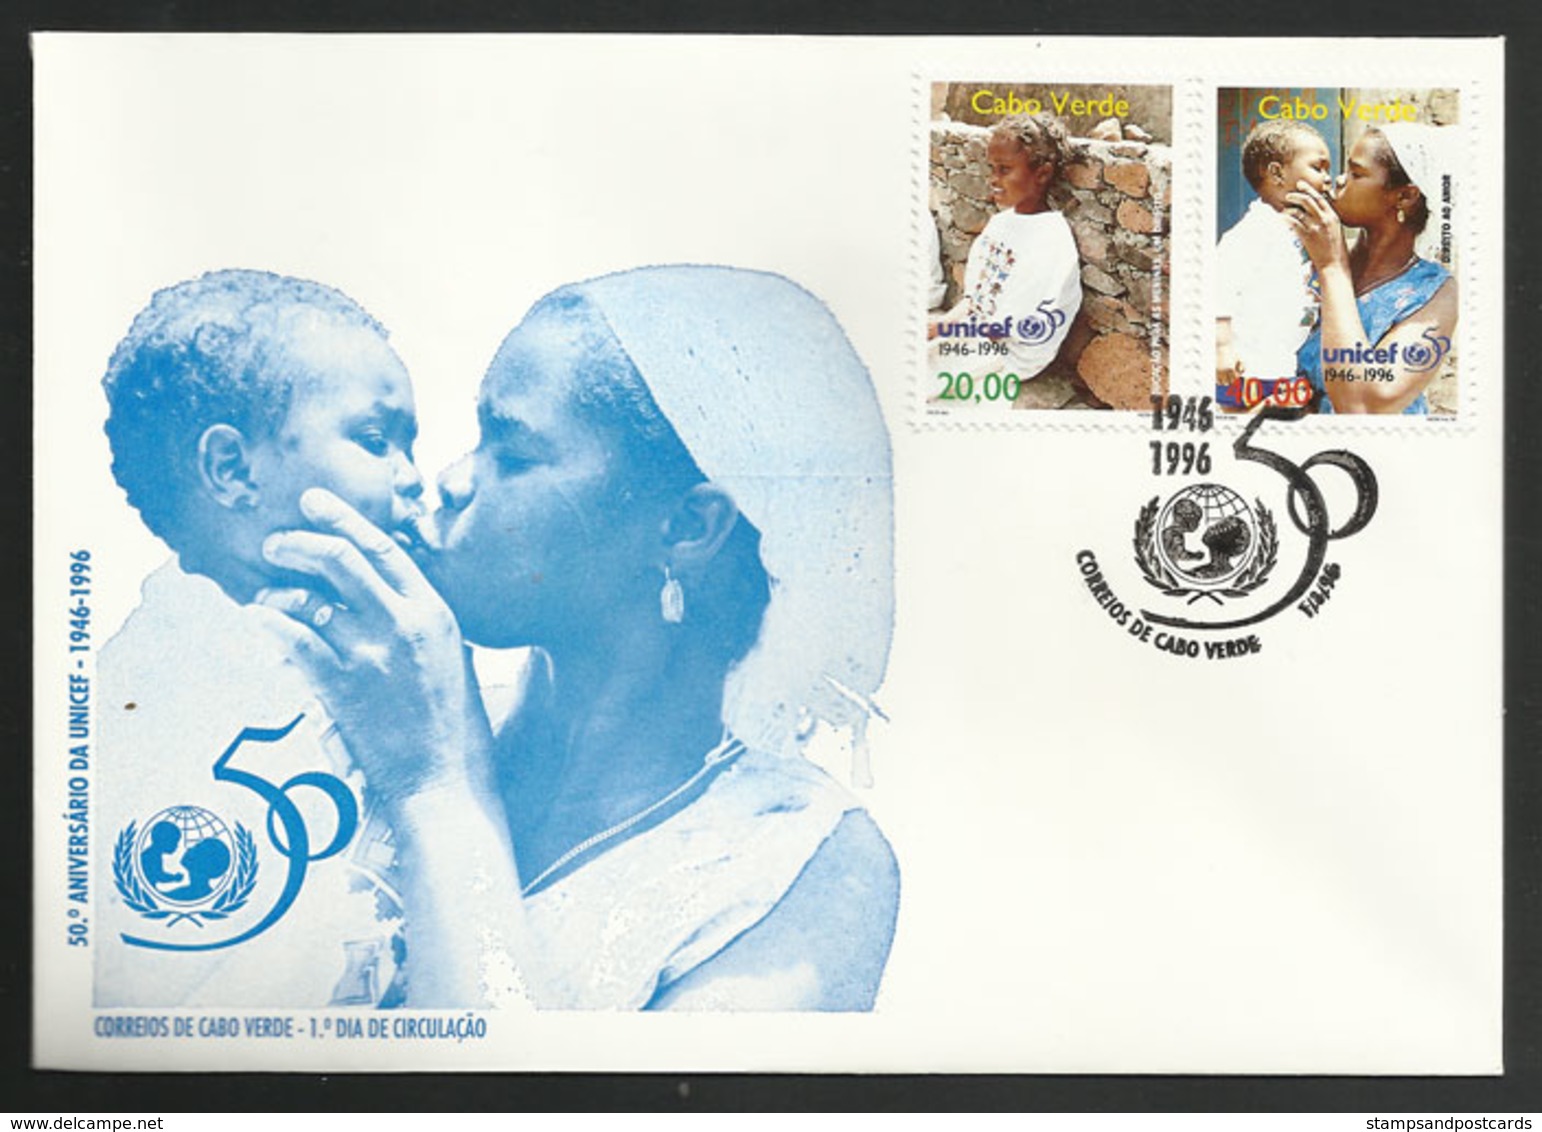 Cabo Verde Cap Vert UNICEF 50 Ans FDC 1996 Cape Verde 50 Years UNICEF FDC - Cap Vert